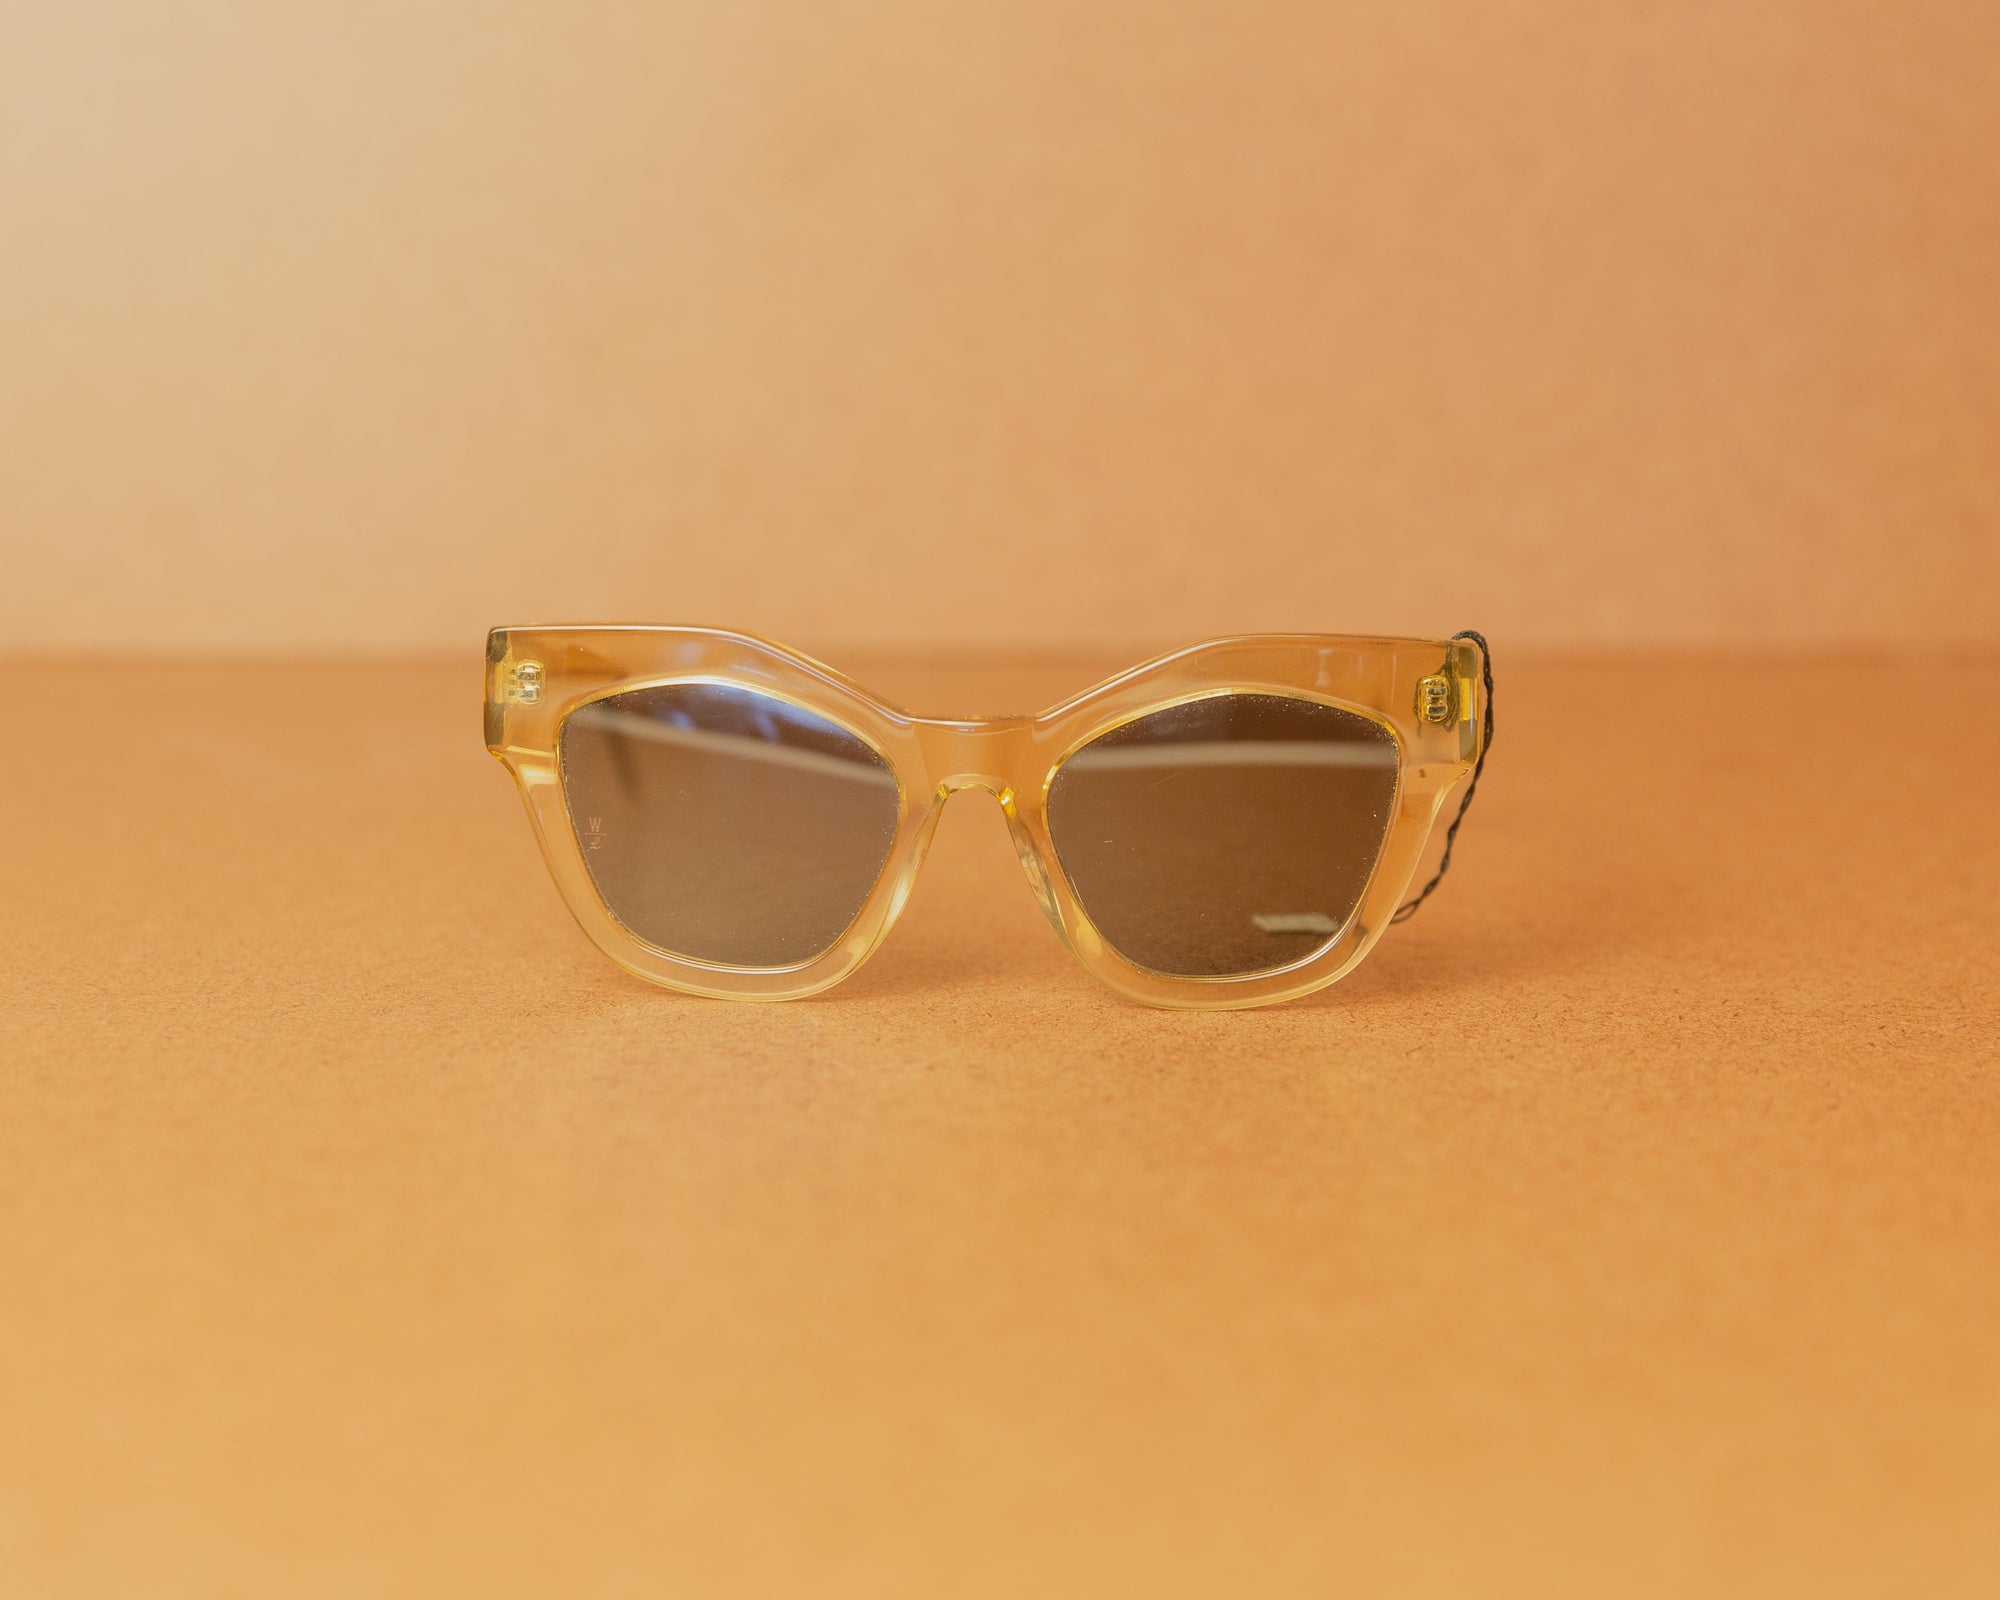 Wonderland ZZYZX Sunglasses in Clear Beach Glass/Green